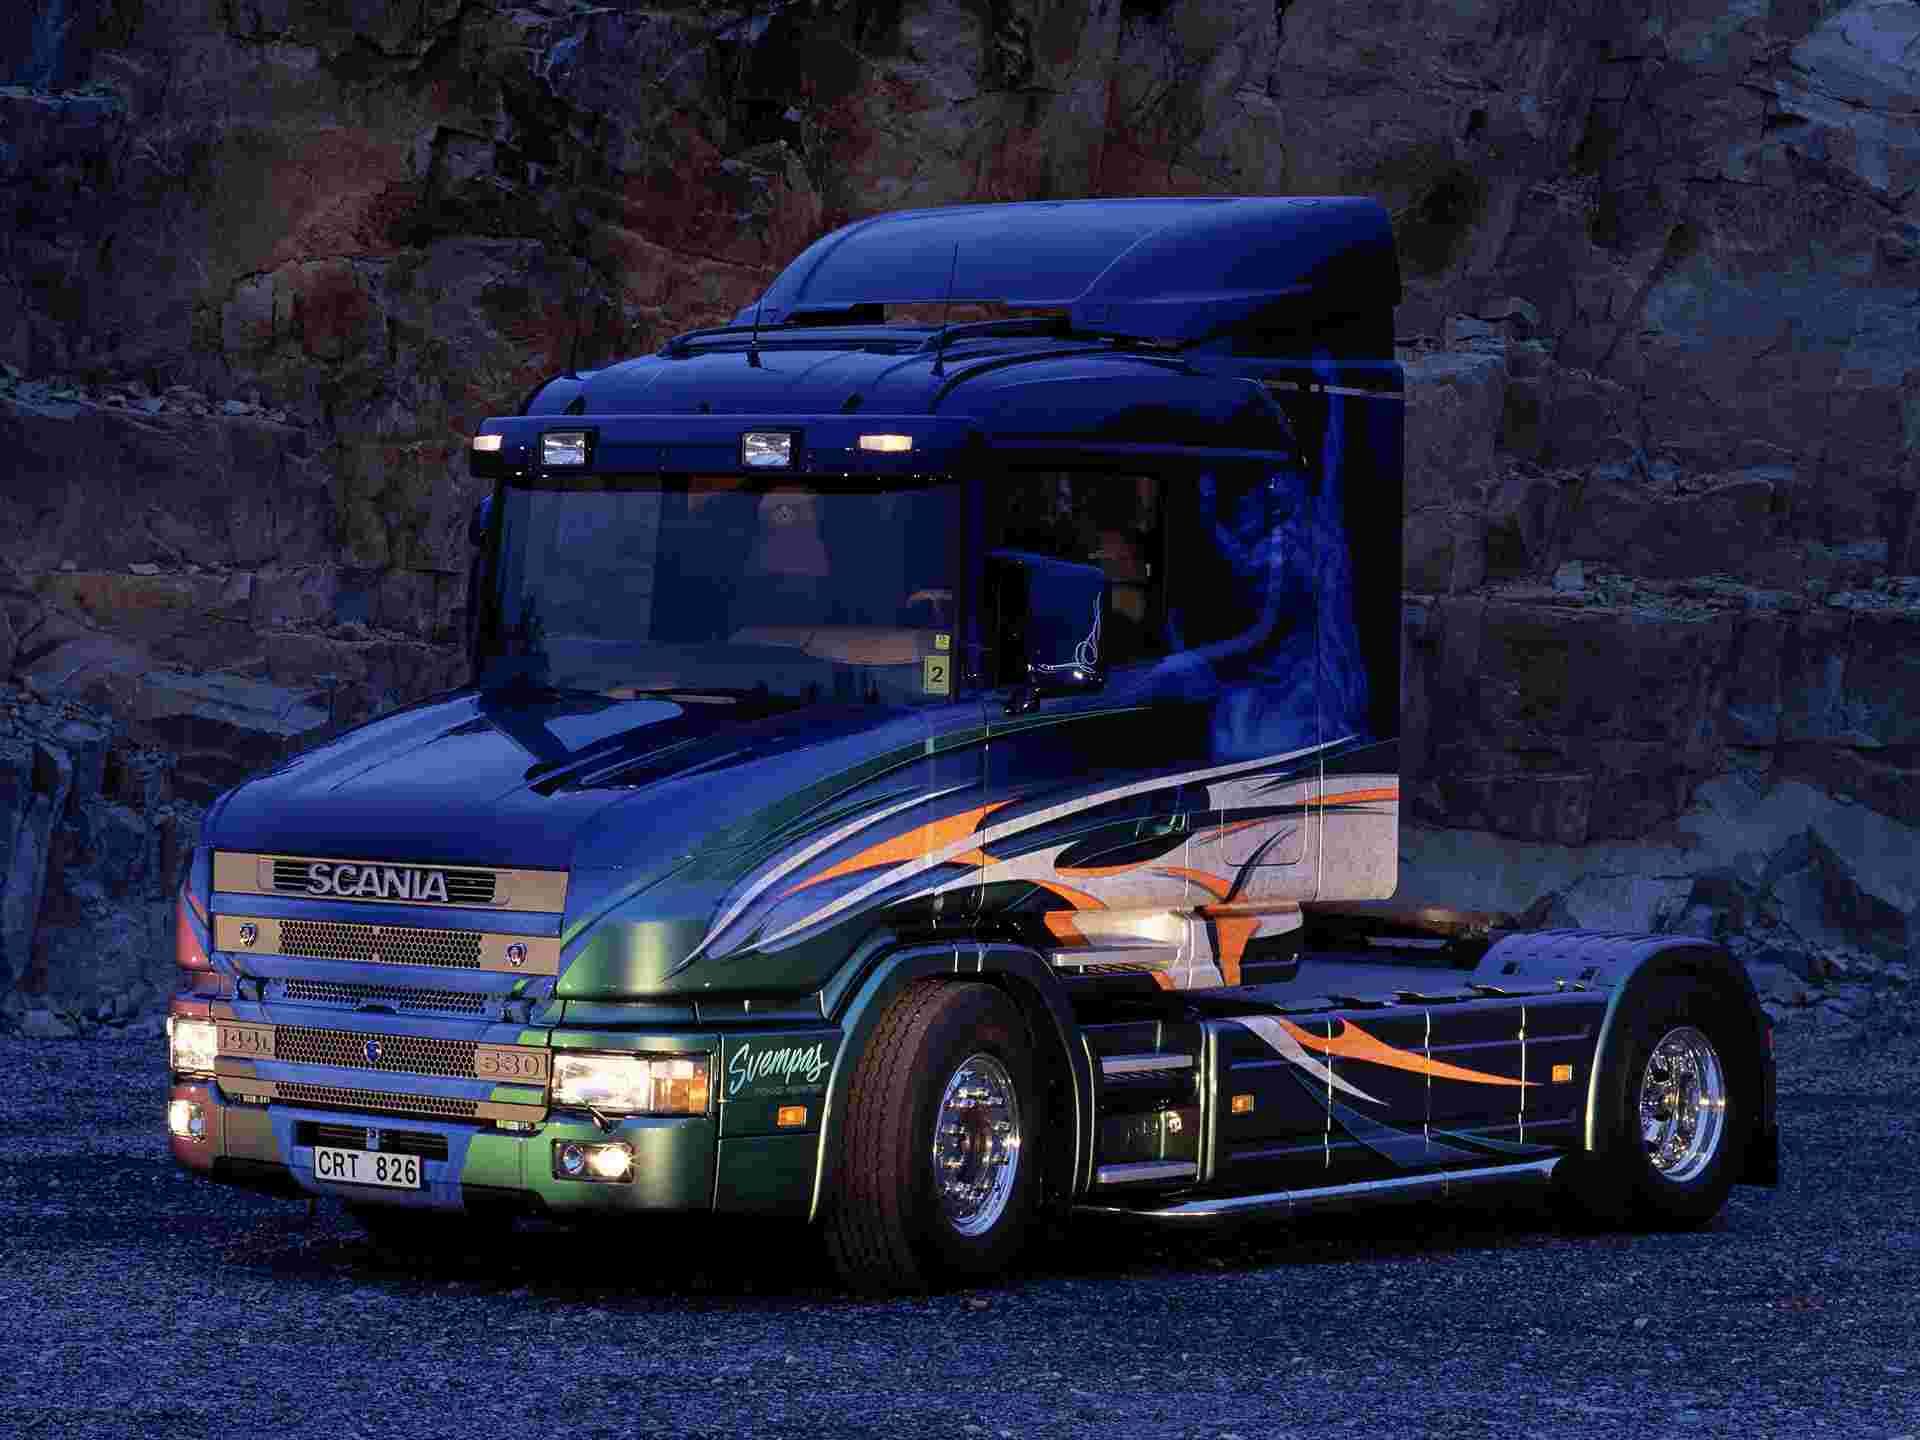 Scania T Series Wallpaper Trucks Buses